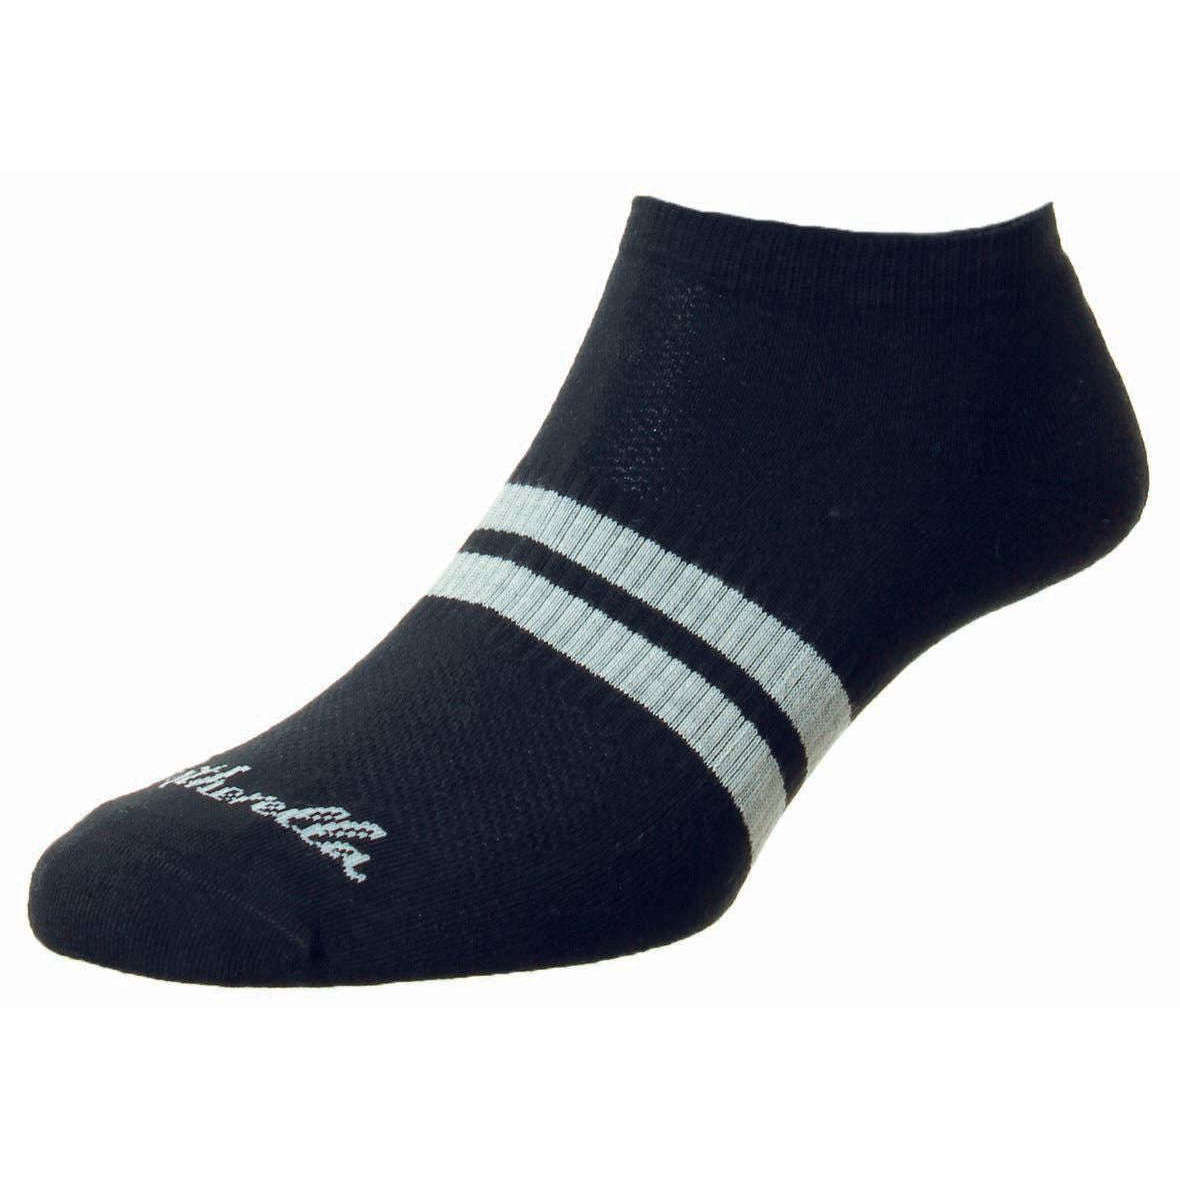 Pantherella Sprint Egyptian Cotton Sports Trainer Socks - Black